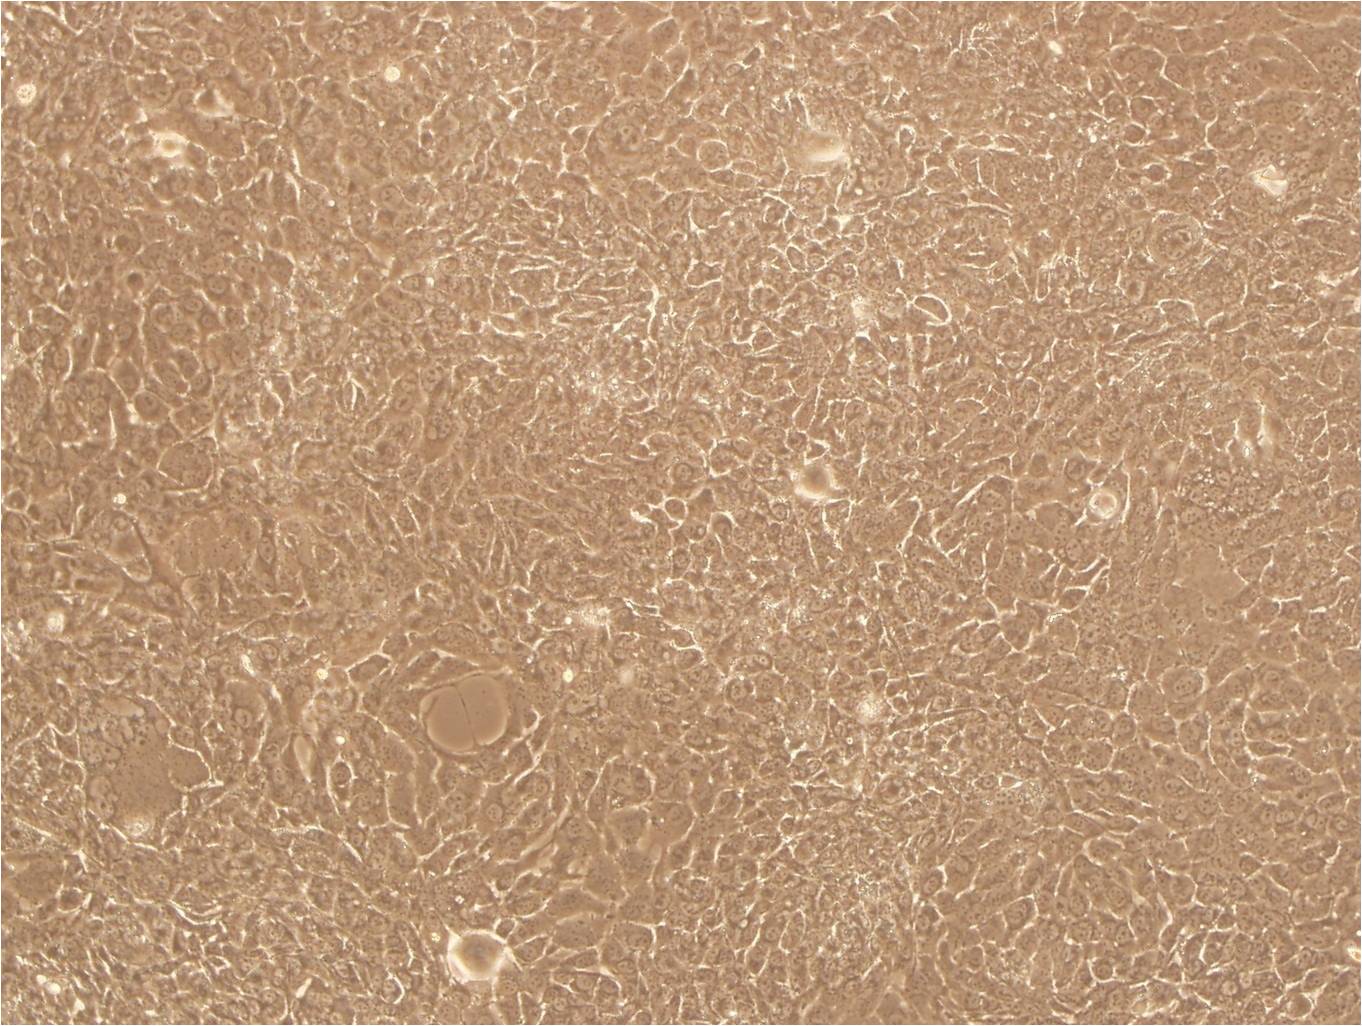 DU145 Cells|人前列腺癌可传代细胞系